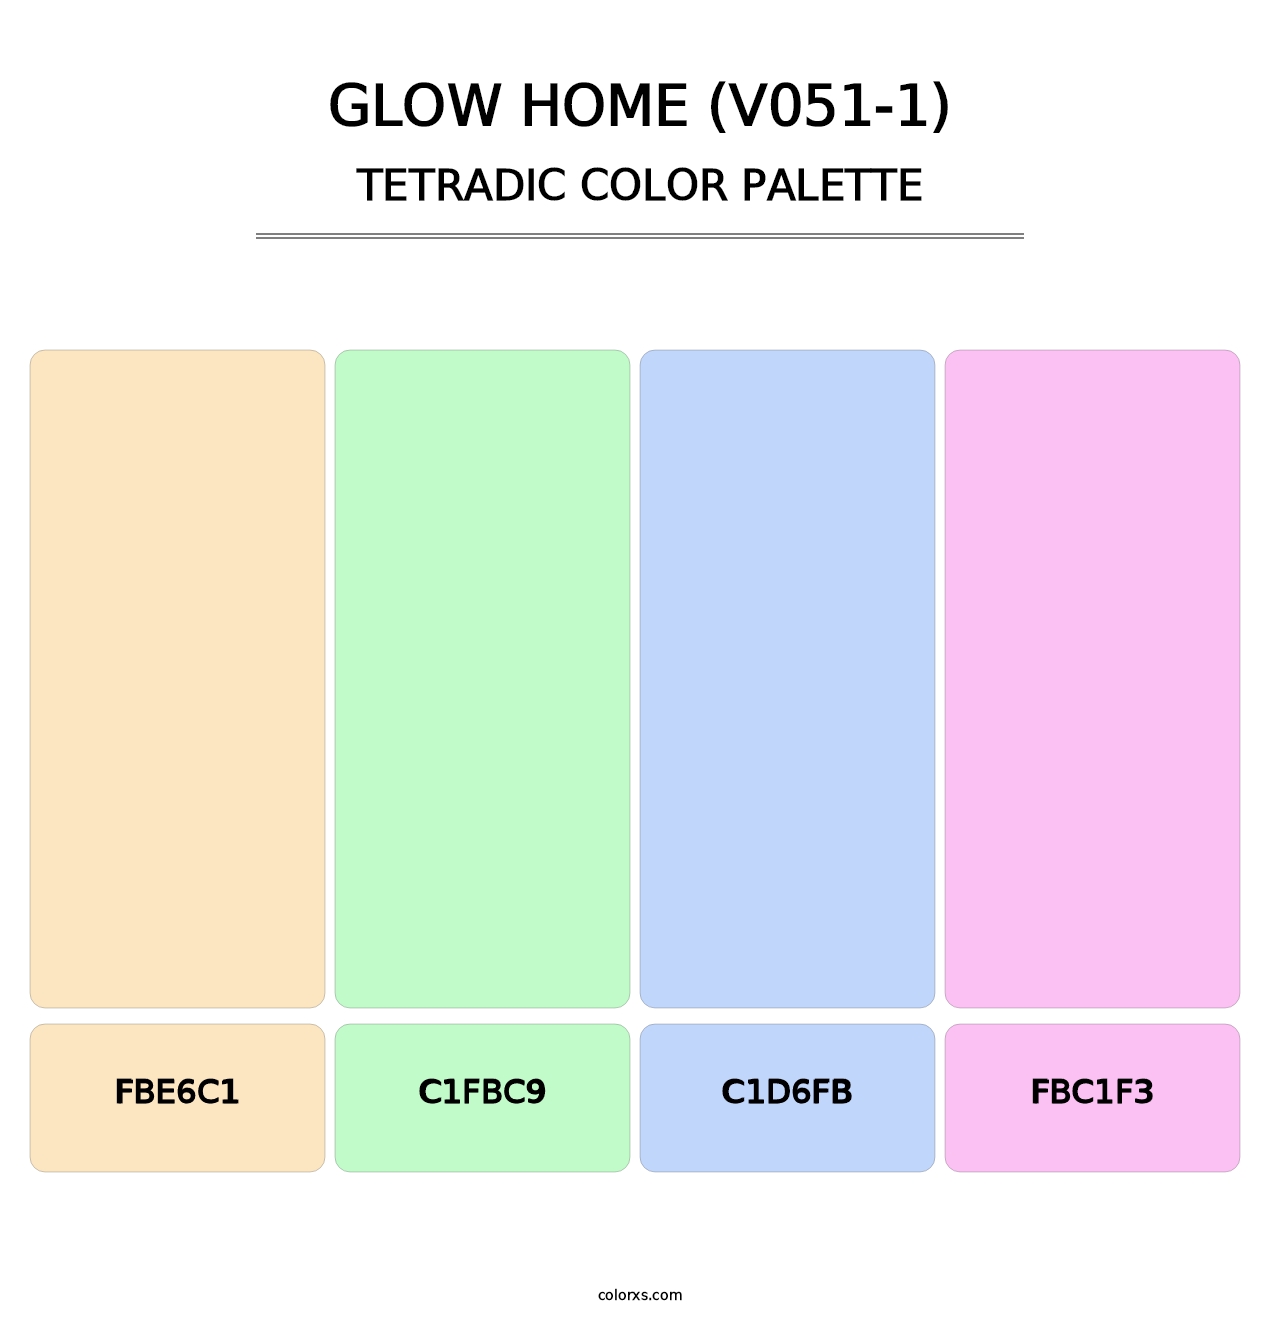 Glow Home (V051-1) - Tetradic Color Palette